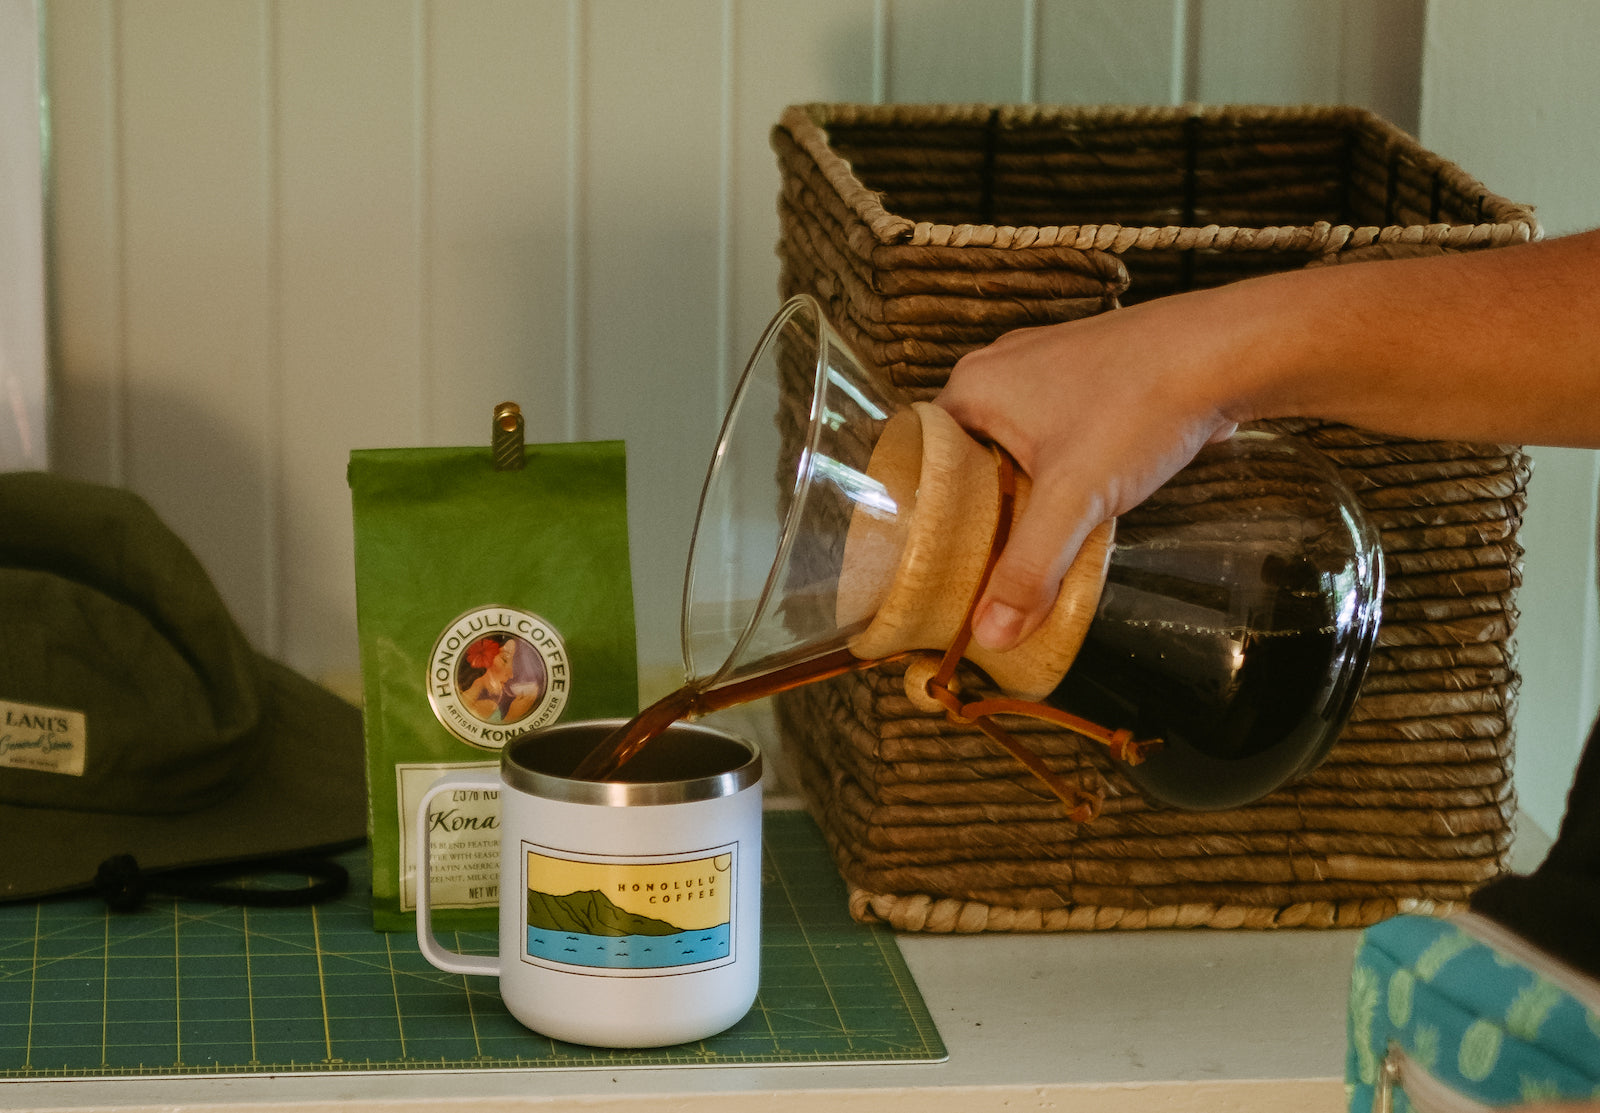 Pouring Kona coffee from a Chemex into a mug